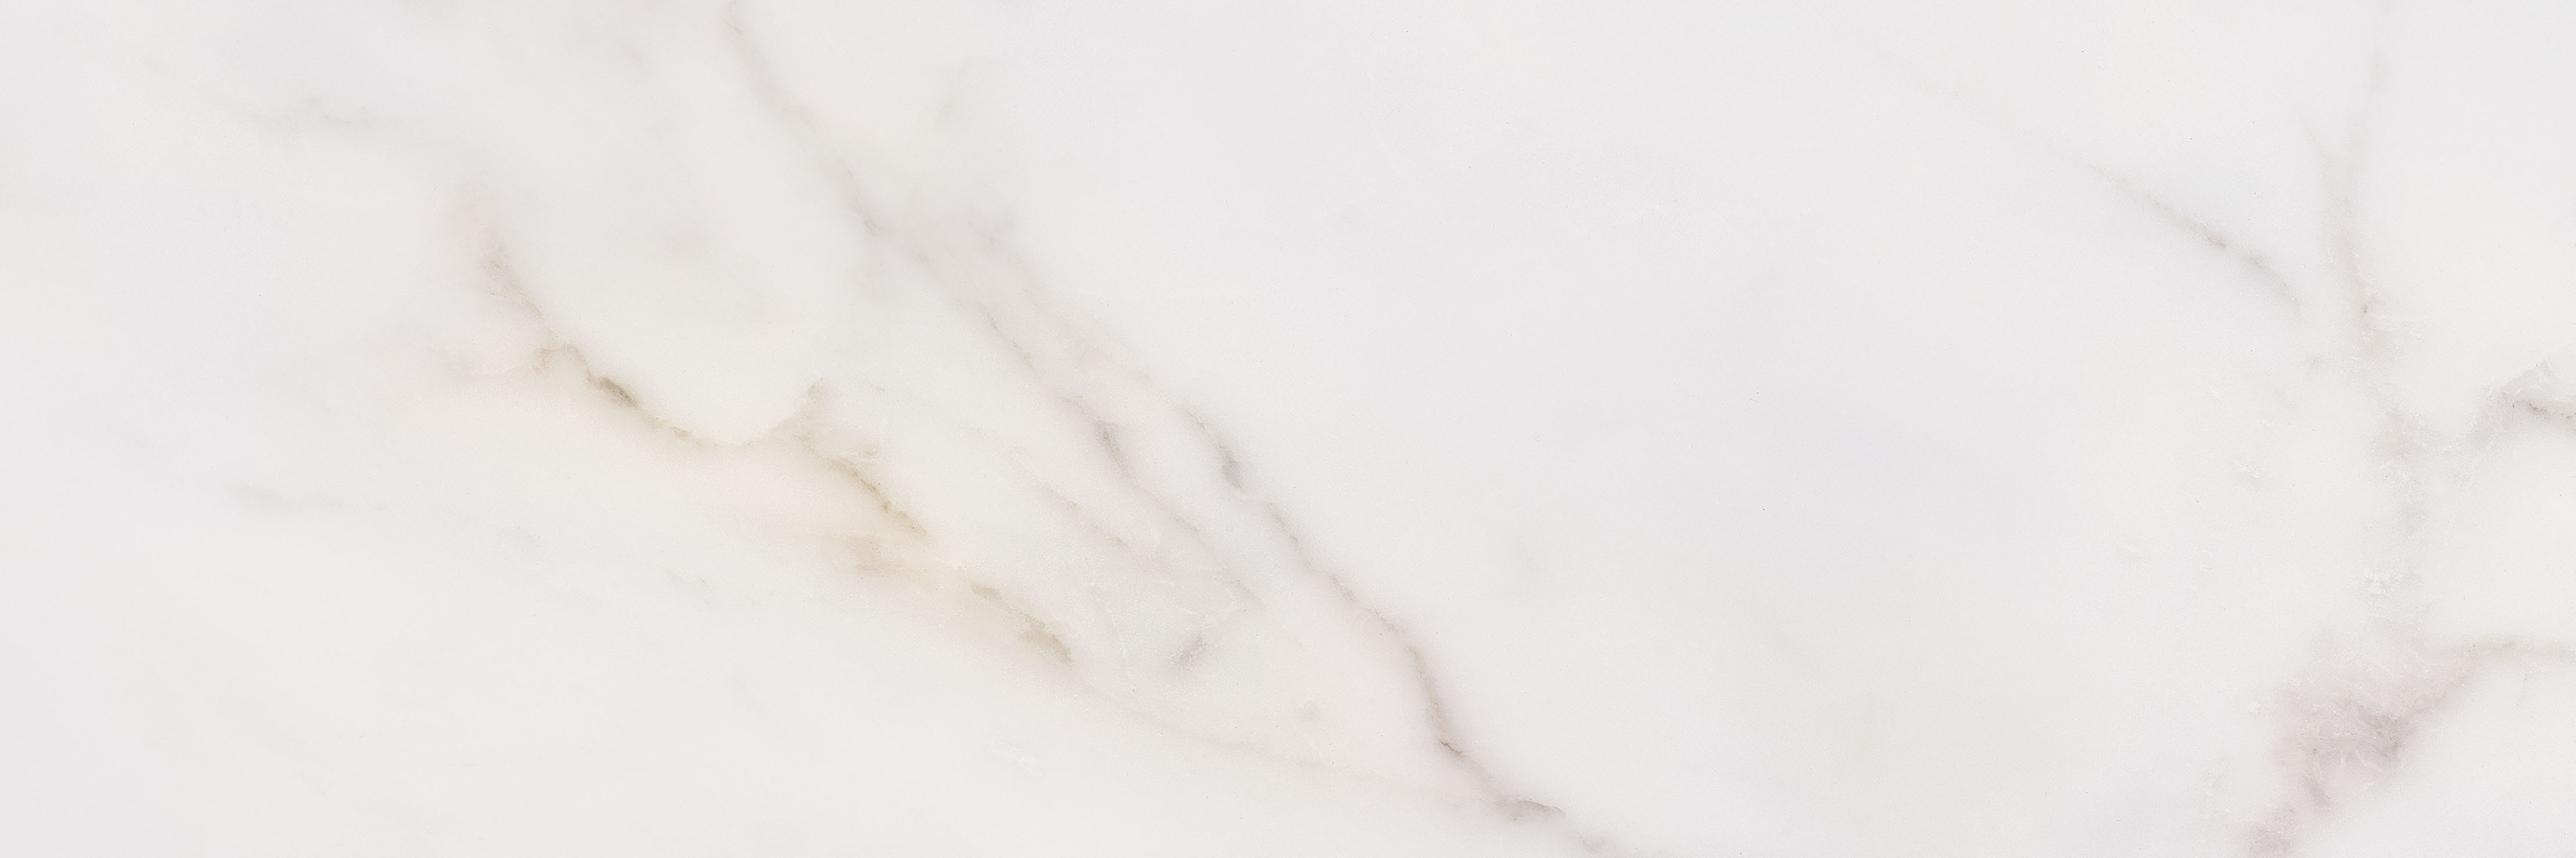 Vanezia Gres Kalmar Wandfliesen Marmoroptik Weiß glänzend 25x75cm rekt. 